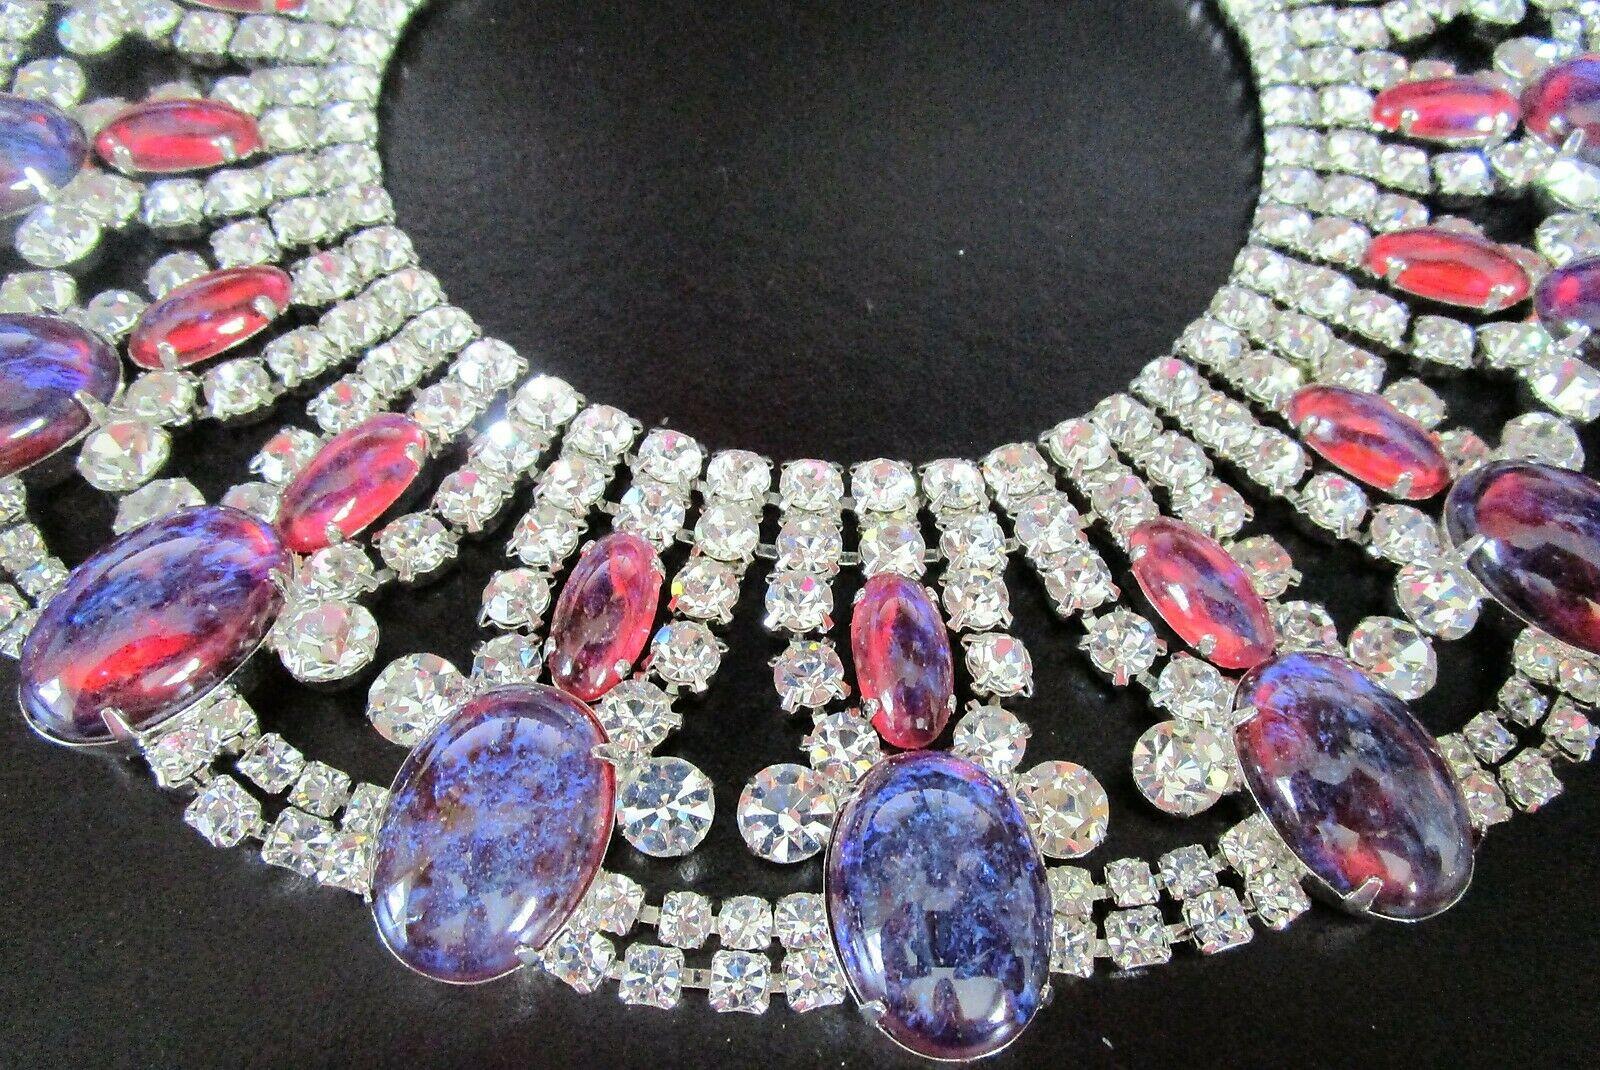 Mixed Cut Robert Sorrell Dragons Breath Fire Opal Crystal Bracelet Necklace Earrings Set